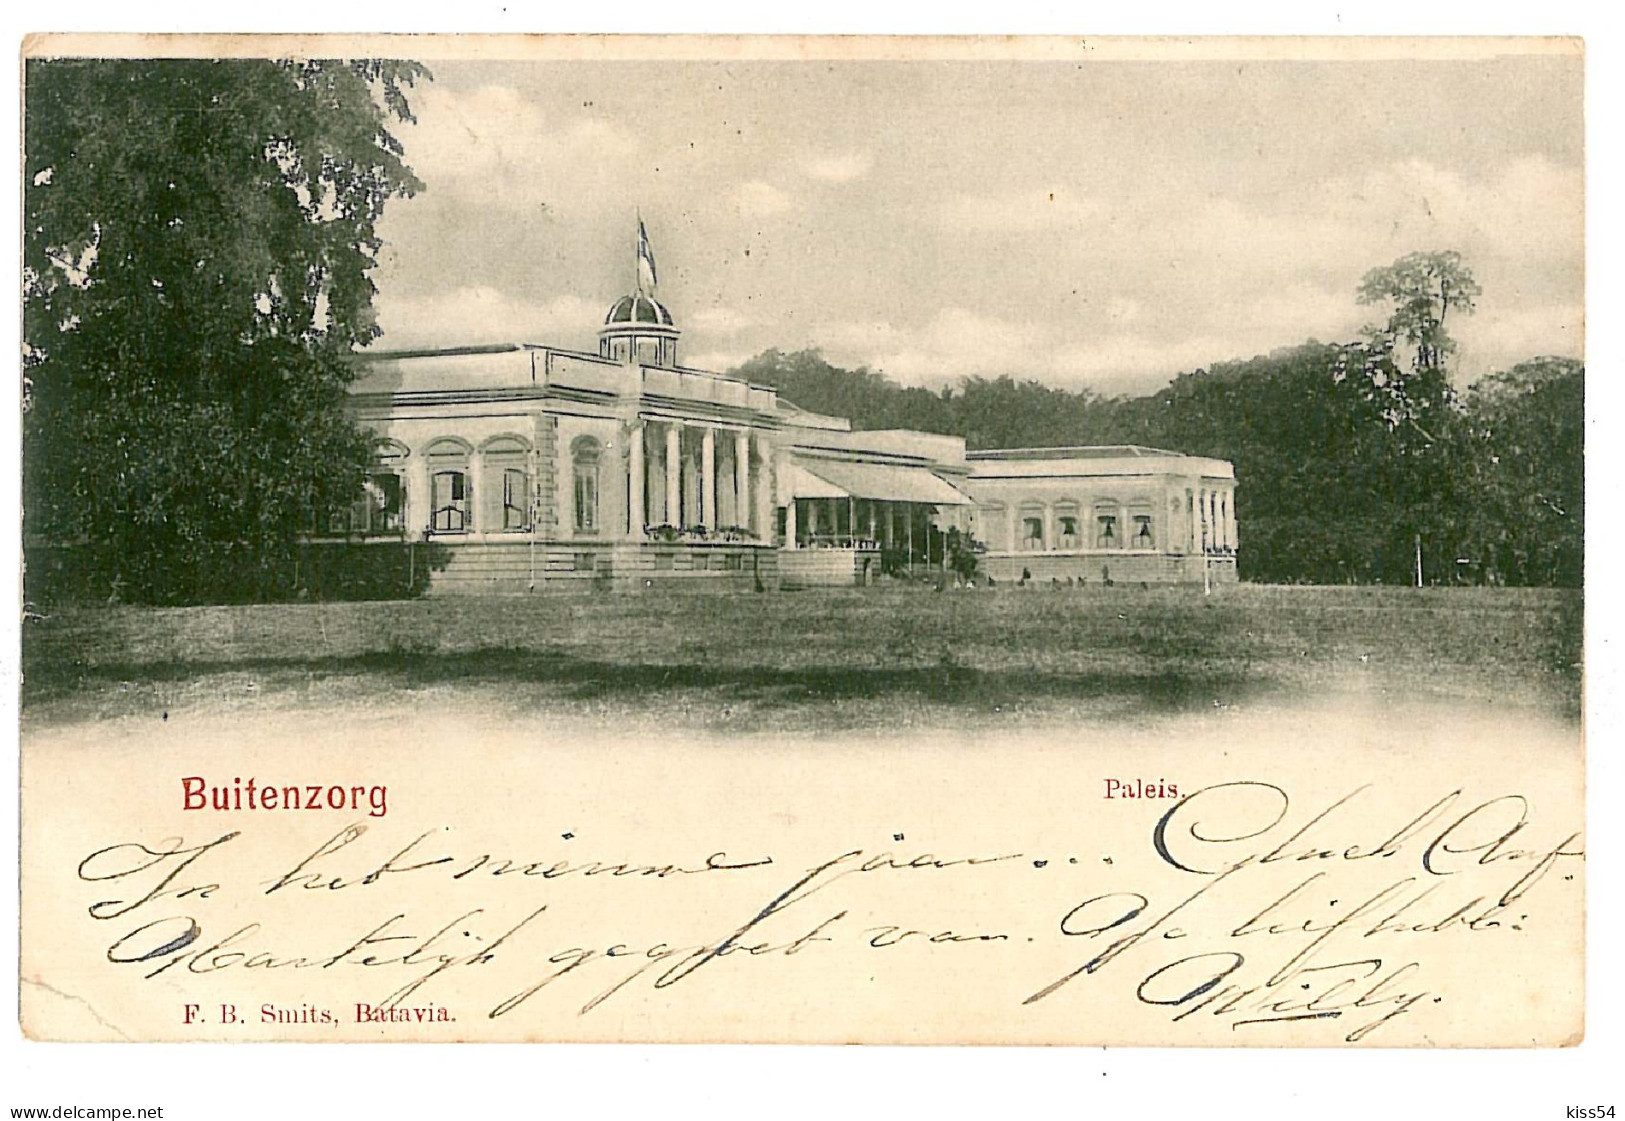 INDO 21 - 9297 BUITENZORG, Indonesia, Litho, Palace - Old Postcard - Used - 1900 - Indonesia